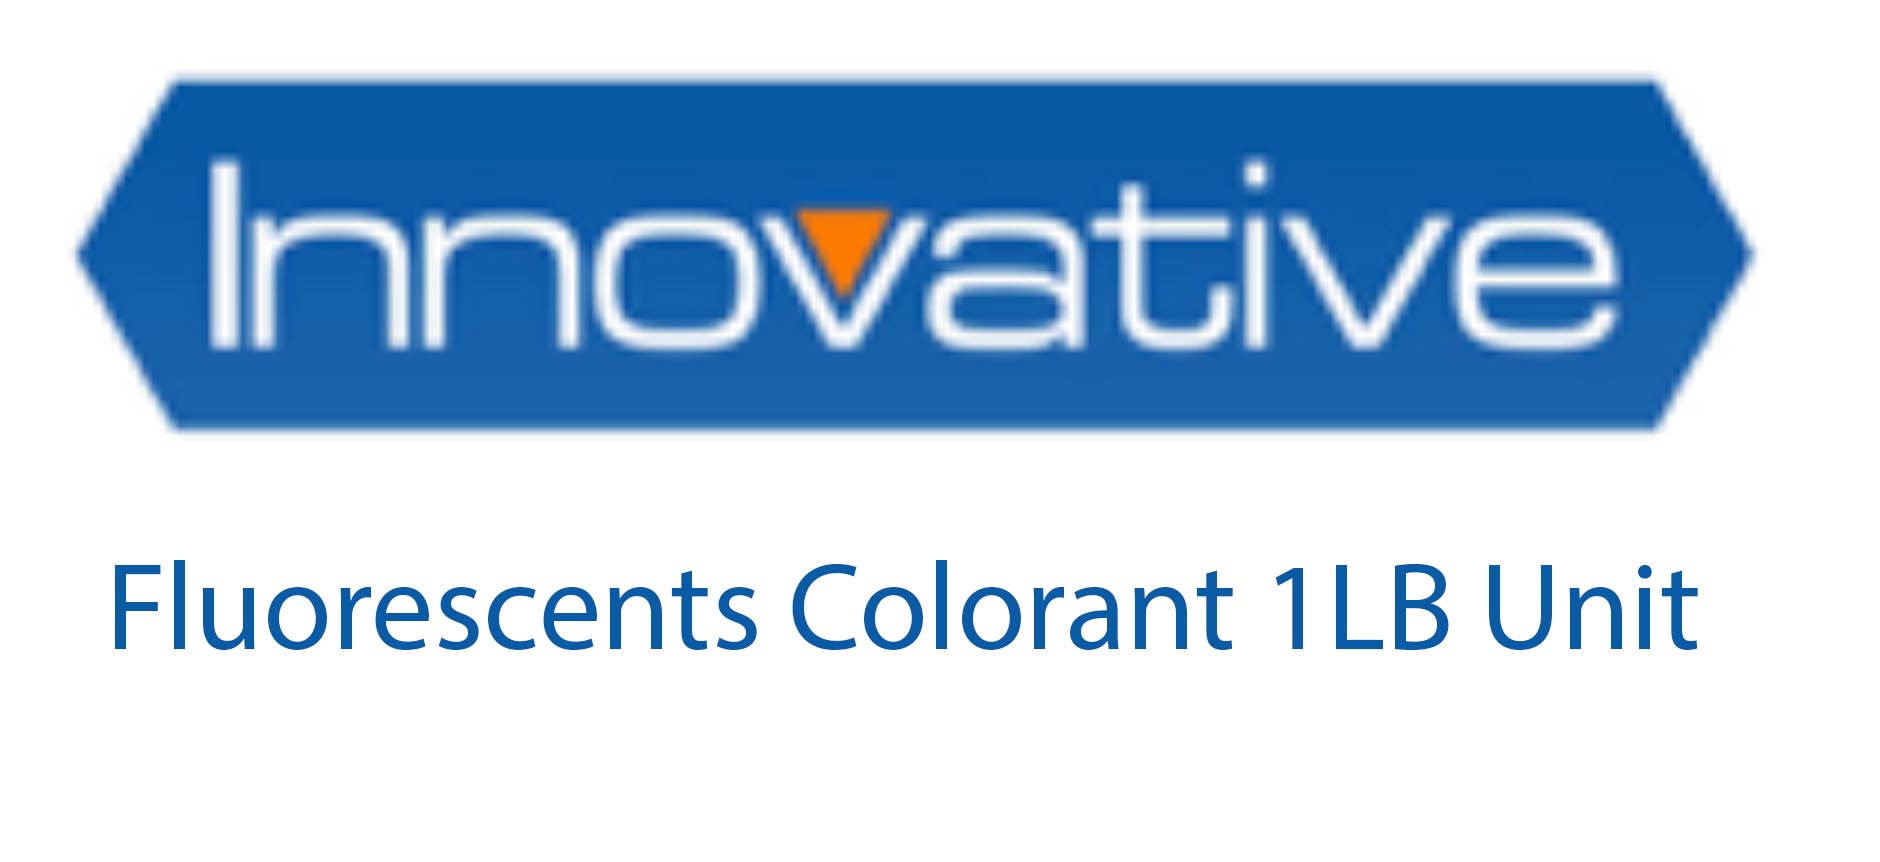 Fluorescents Colorant (1 lb.) Units available